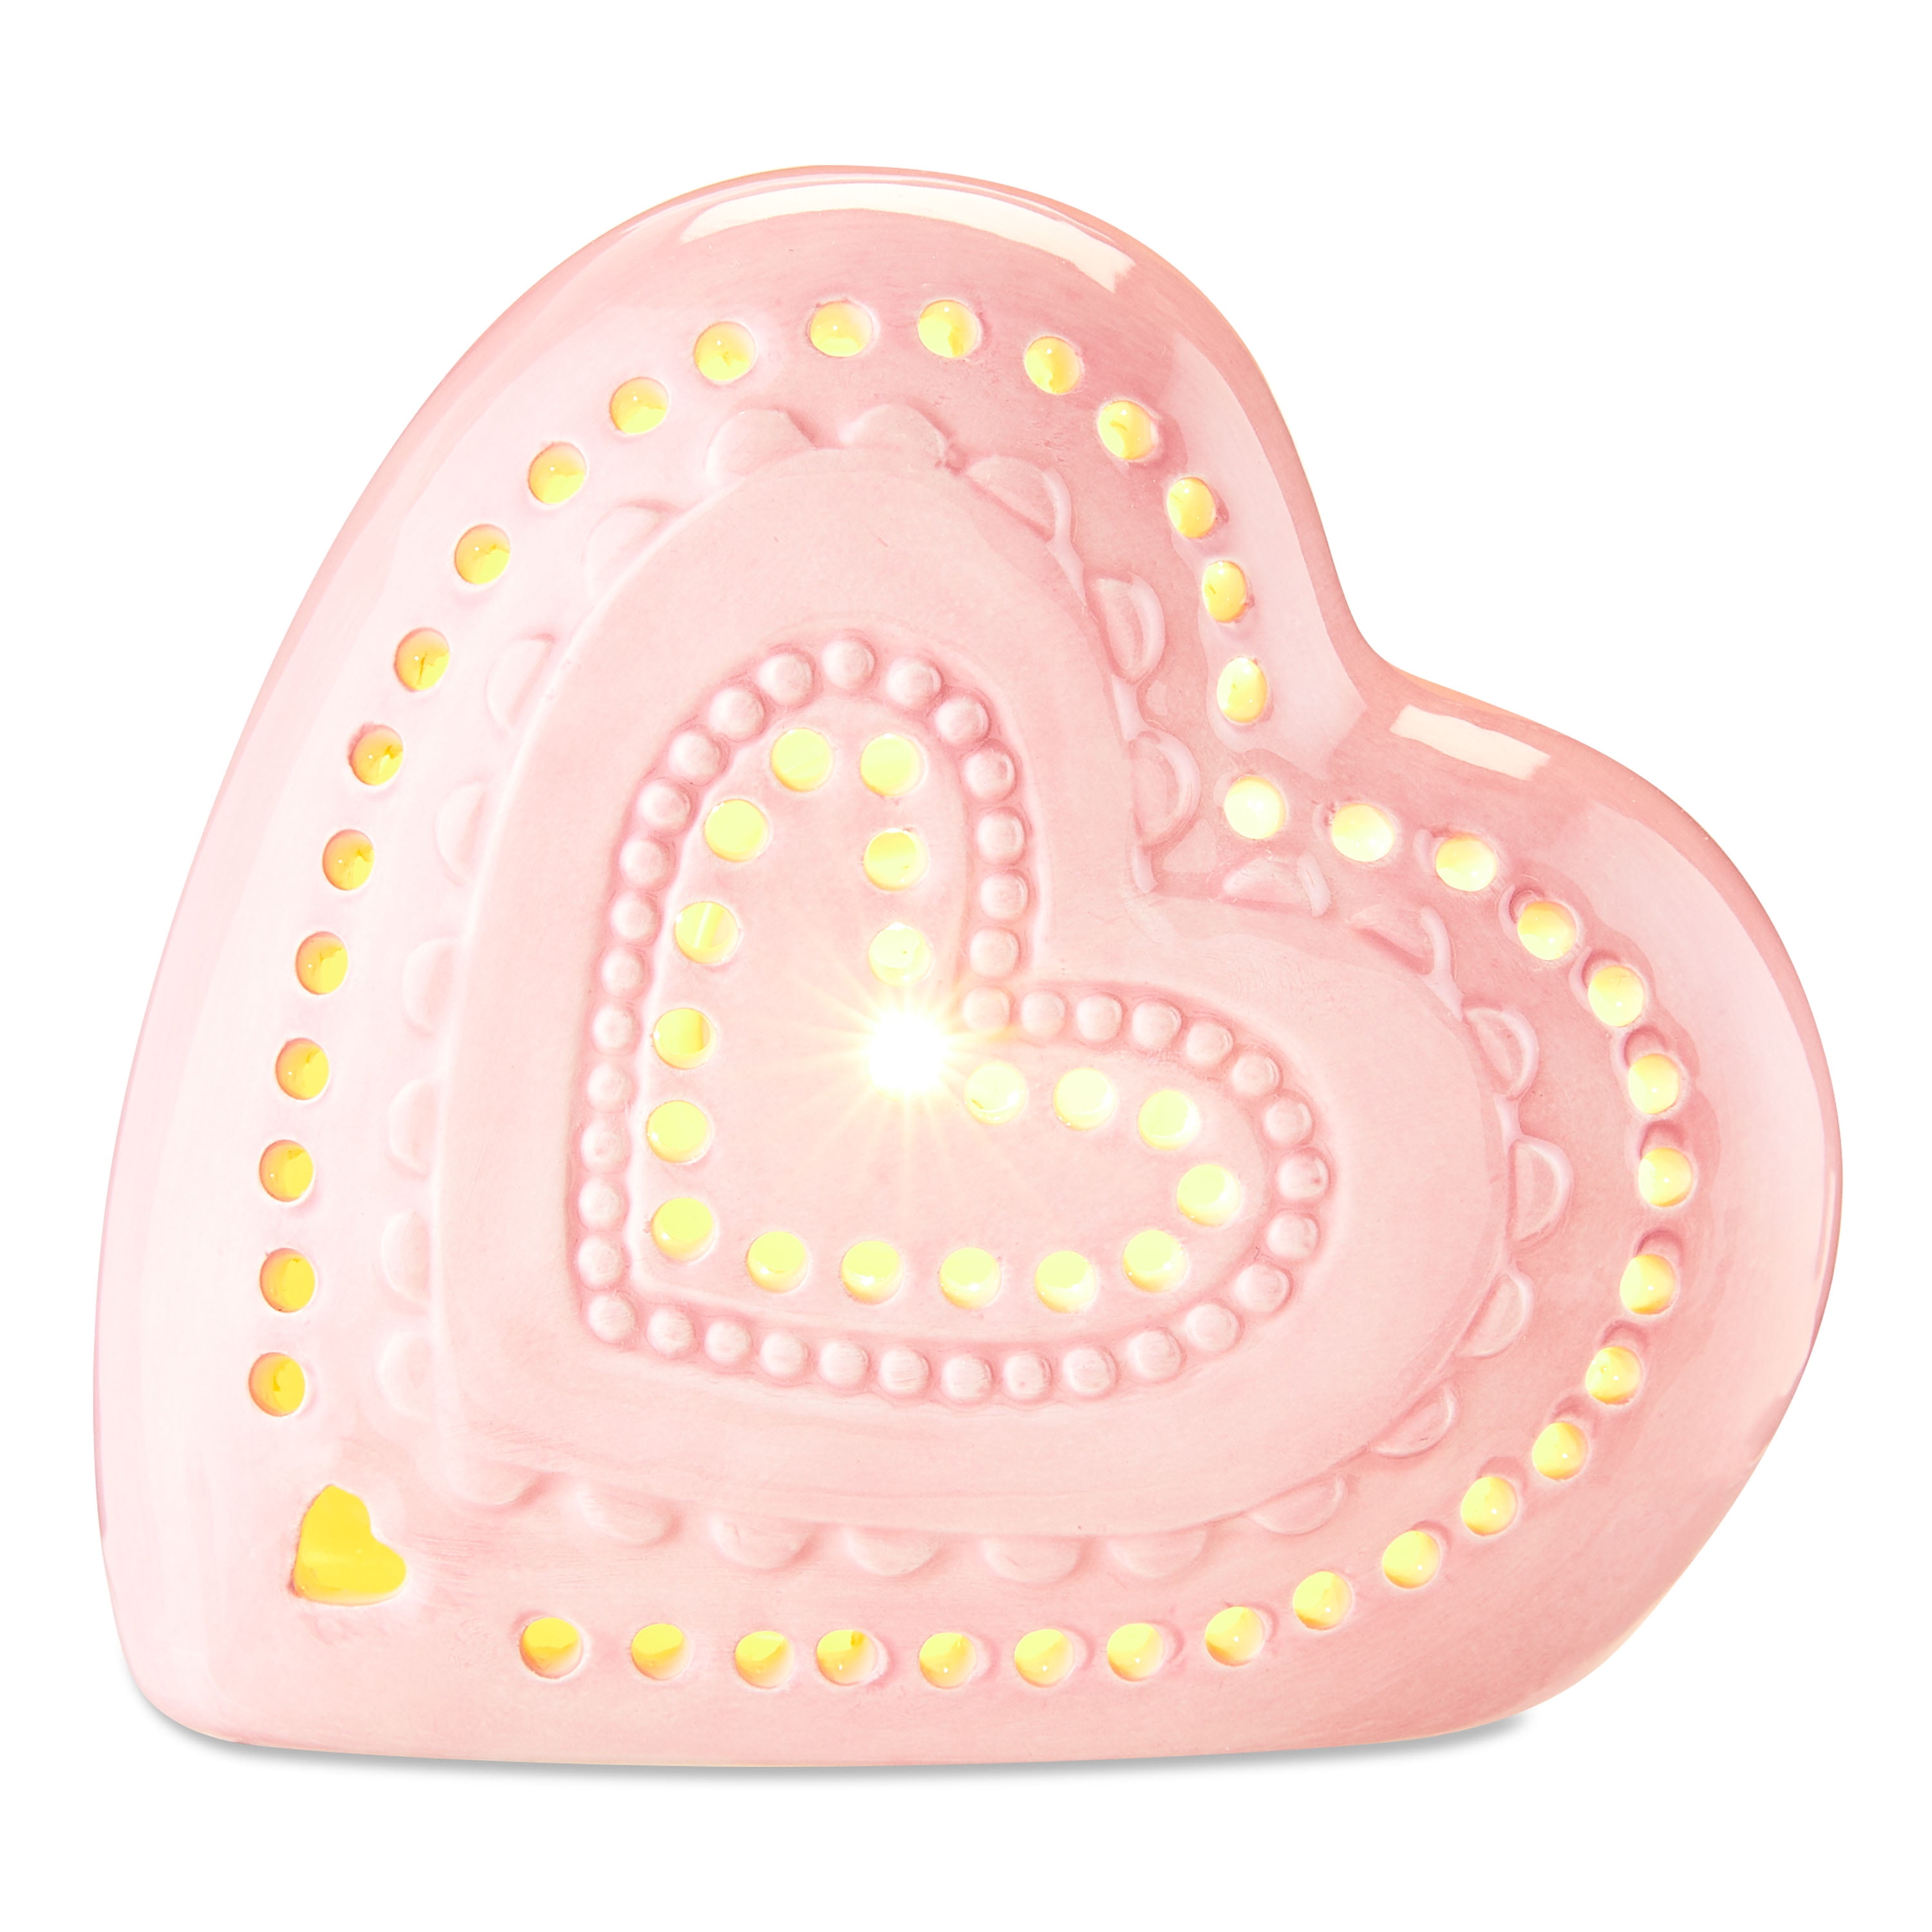 WAY TO CELEBRATE! Way To Celebrate 4.25" LED Ceramic Heart Decoration, Pink